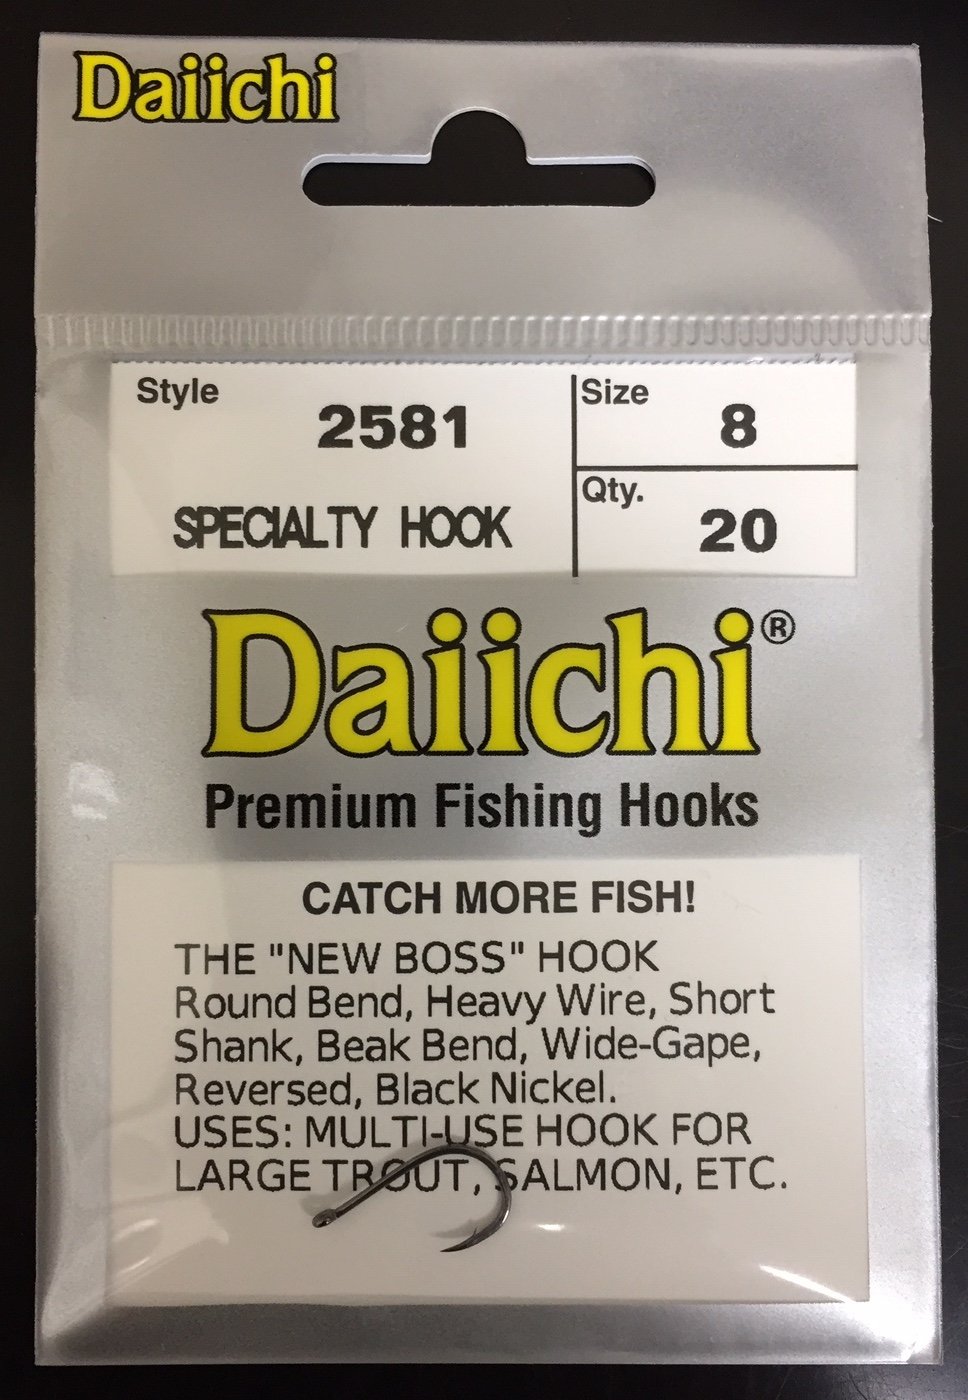 DAIICHI - 1130 Wide Gape Hook 25 pk